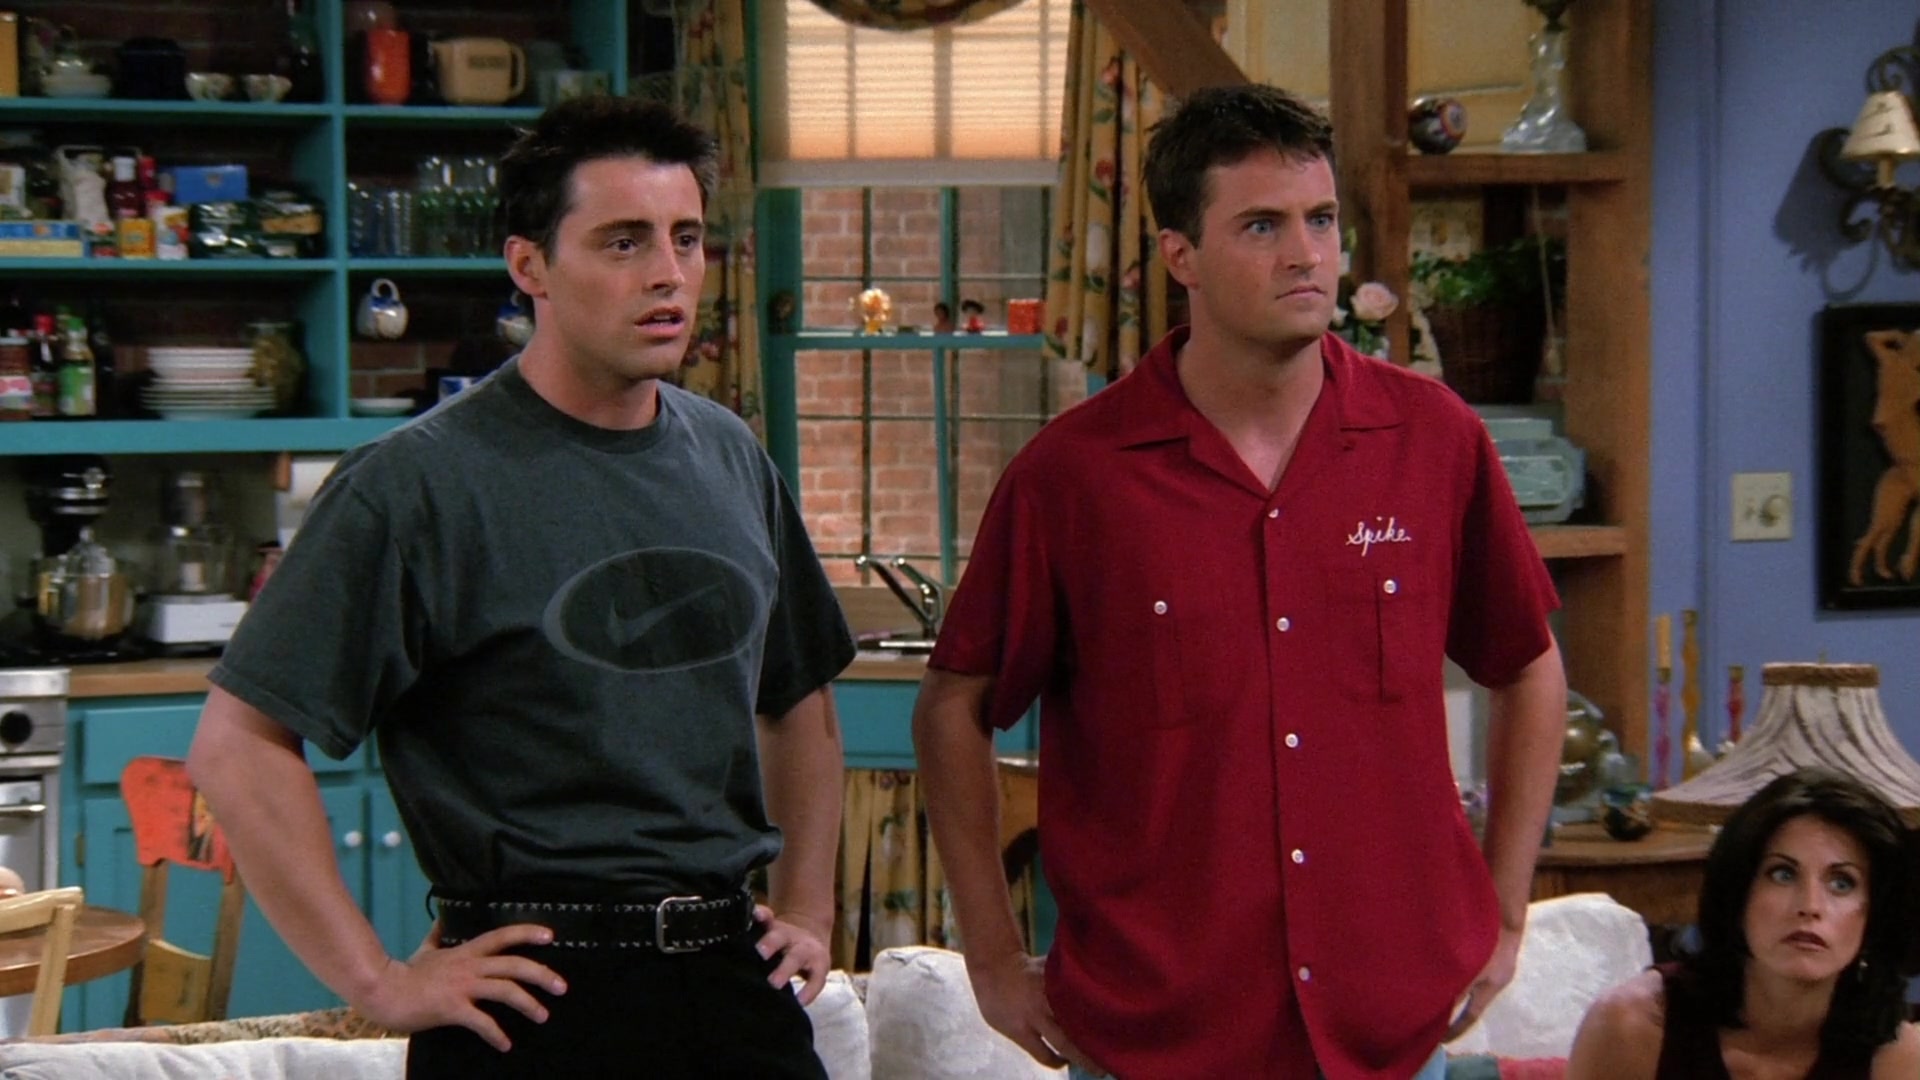 Nike T-Shirt Worn by Matt LeBlanc (Joey Tribbiani) in Friends Season 2 Epis...